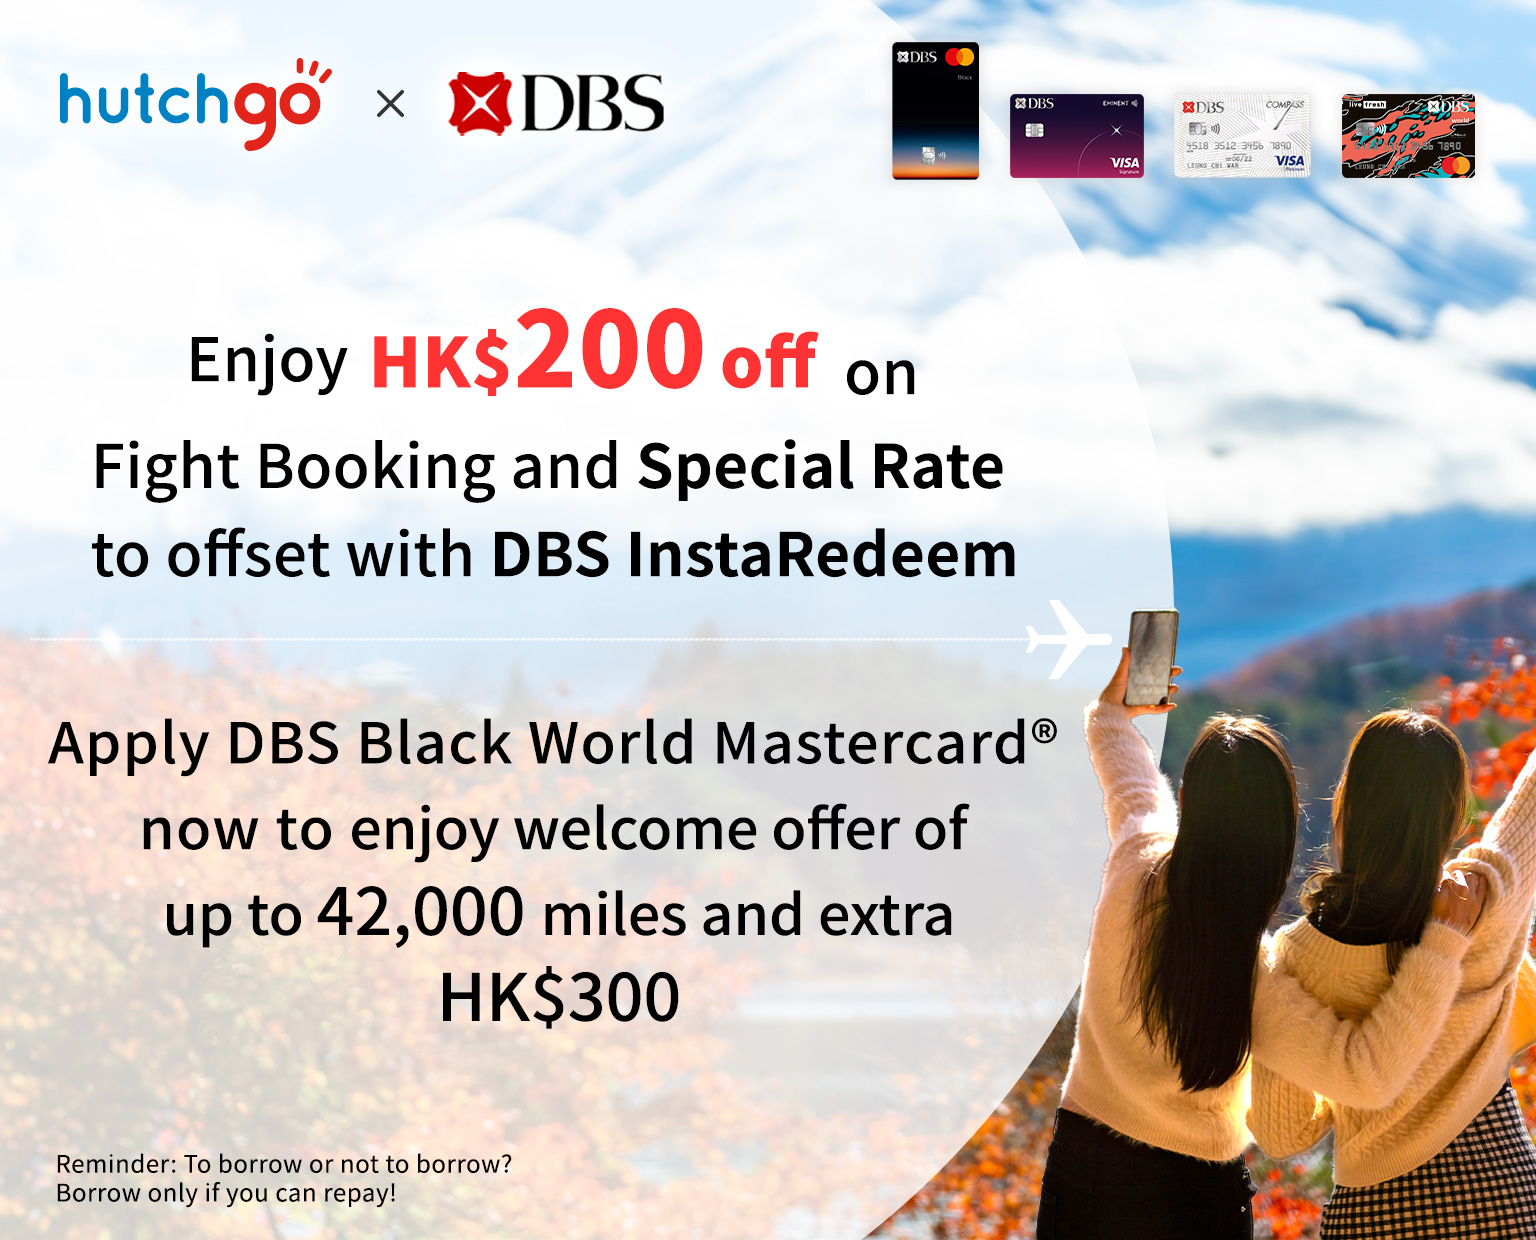 DBS InstaRedeem x hutchgo.com Offset your travel products fee
		with DBS InstaRedeem